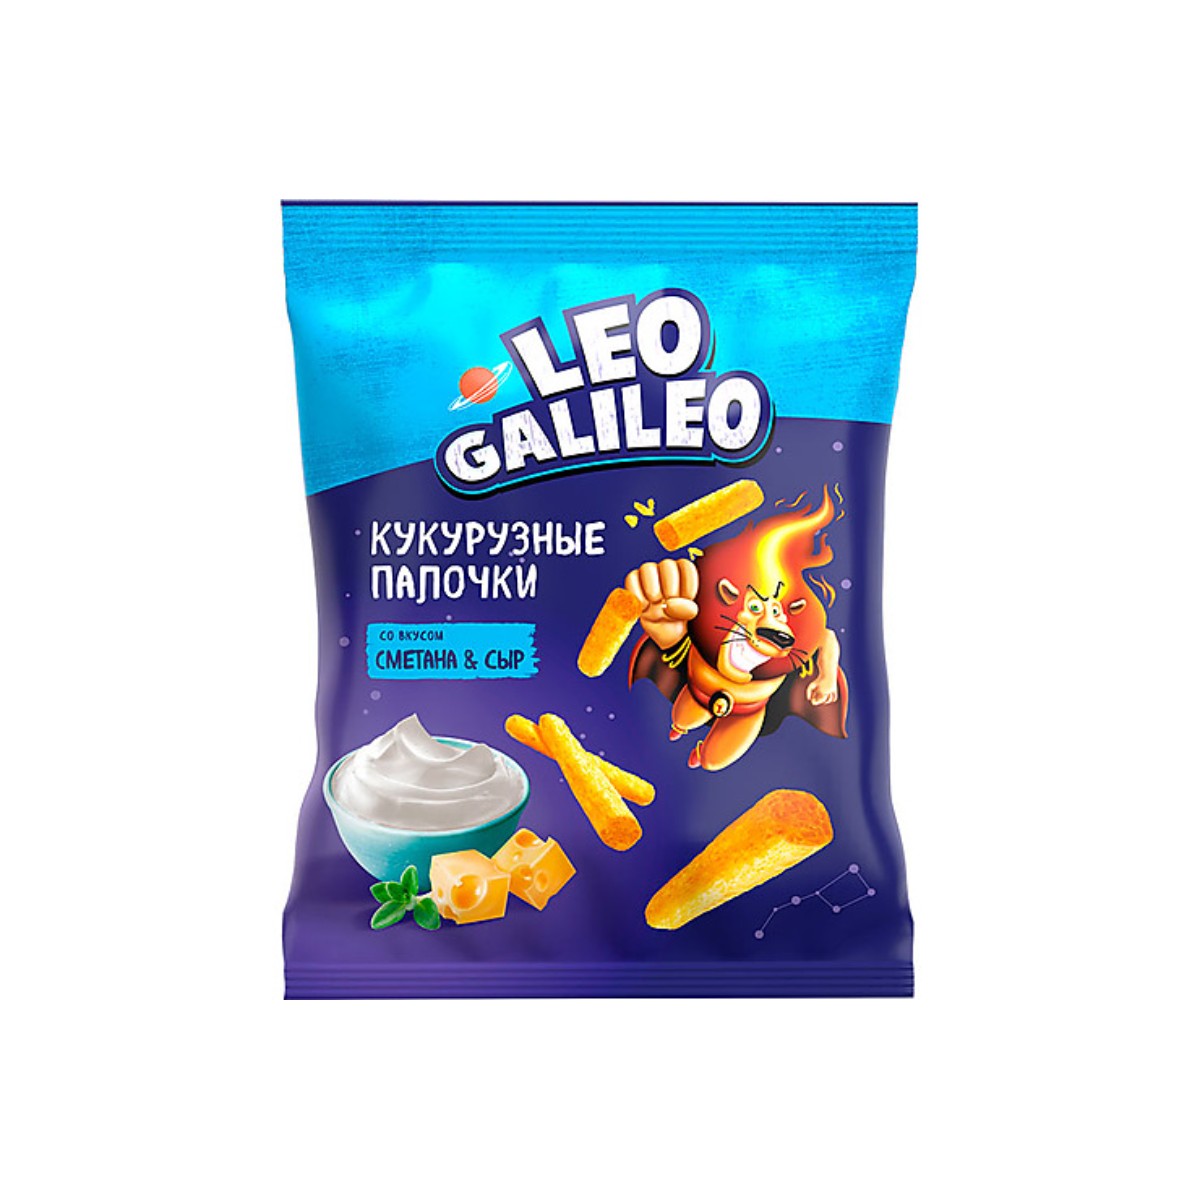 Кукурузные палочки Leo Galileo со вкусом сметана сыр, 8 шт по 45 г